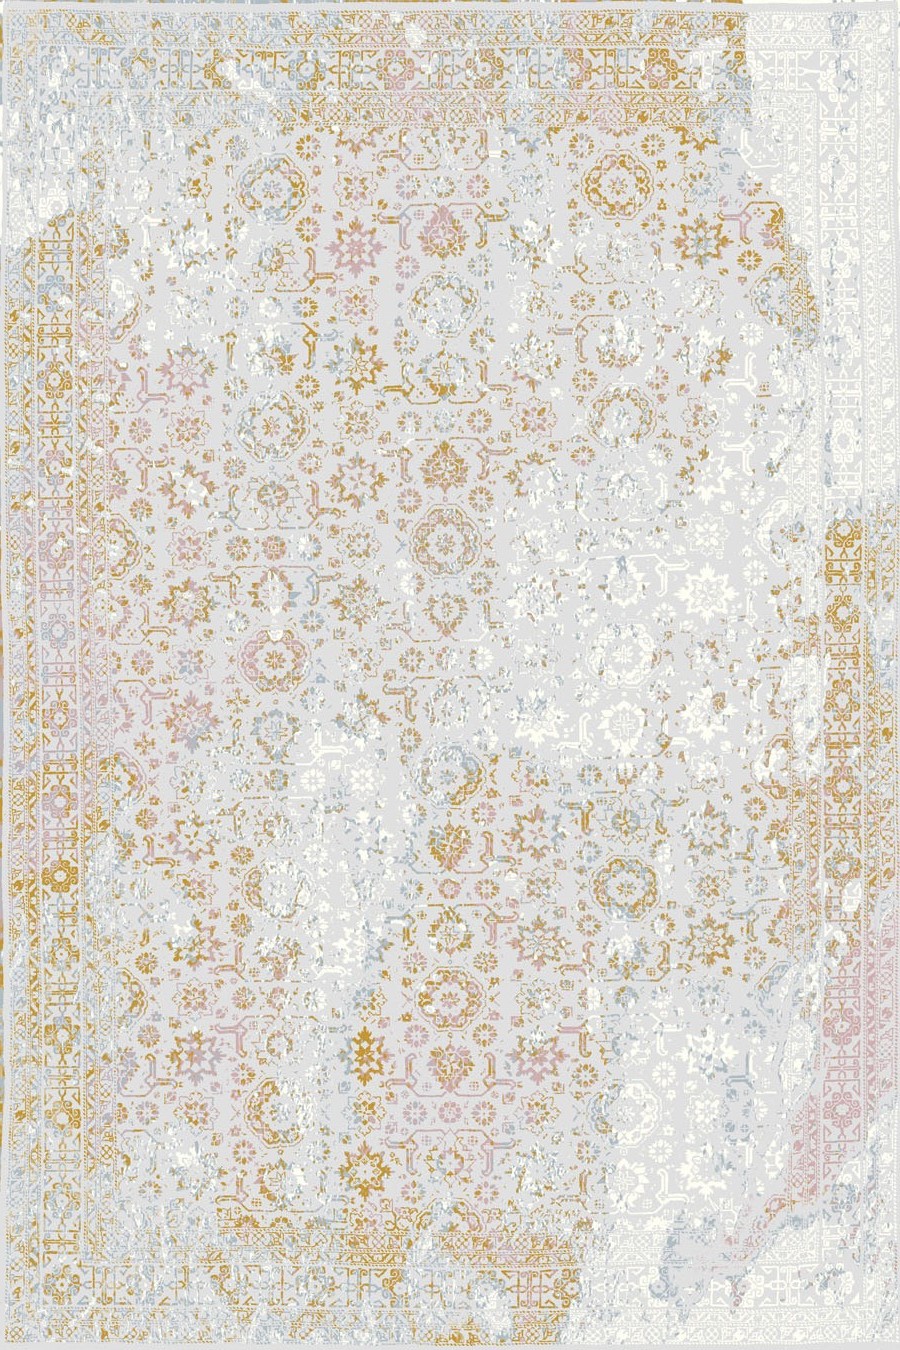 Modern 14 – (200*300cm) Persian Design Carpet Black Friday Special